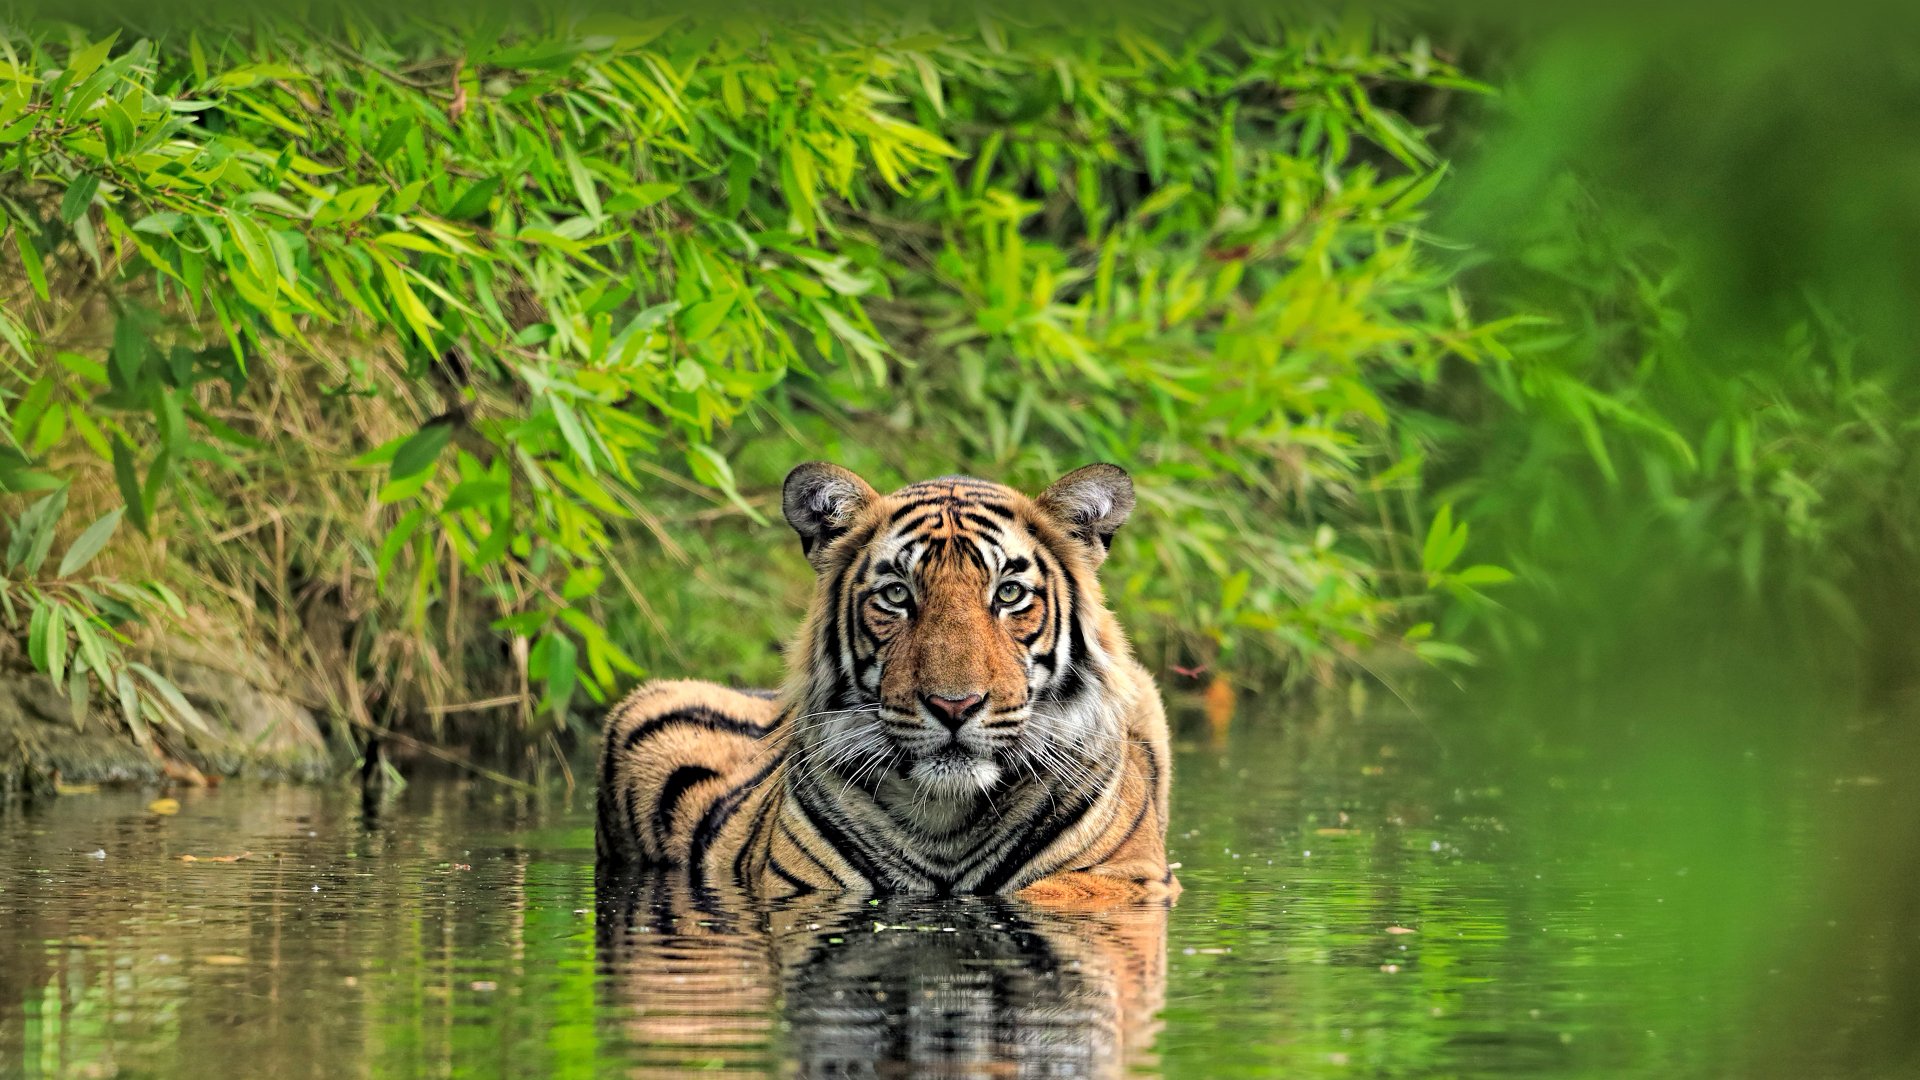 Bengal Tiger 4K Ultra HD Wallpaper - Download Now